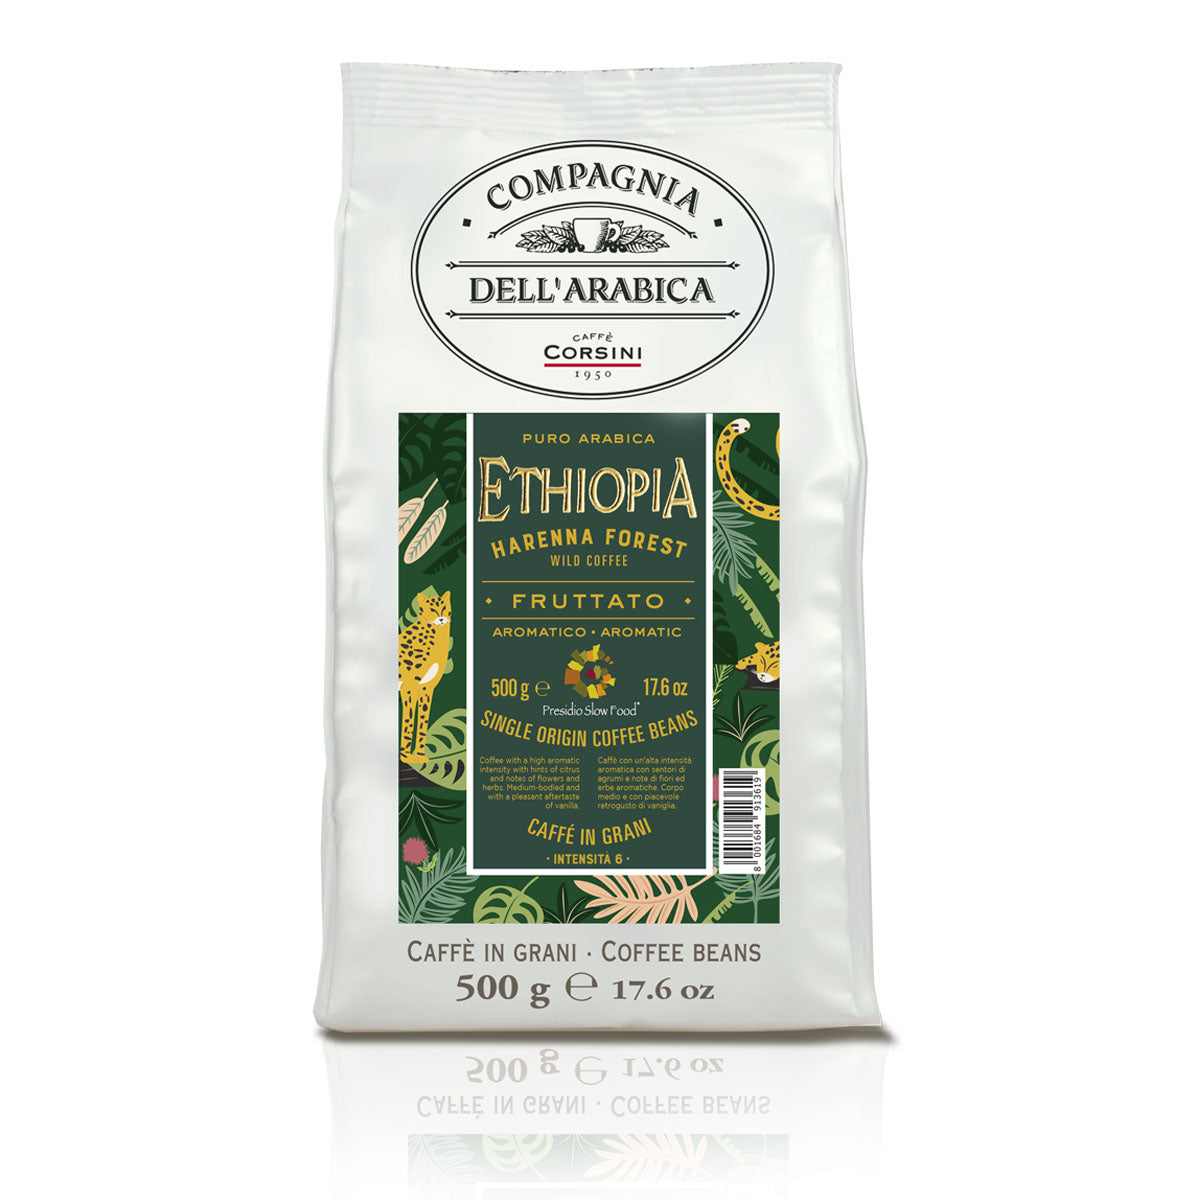 Coffee beans | Ethiopia Natural Coffee | 100% Arabica | 500g | Box of 15 packs